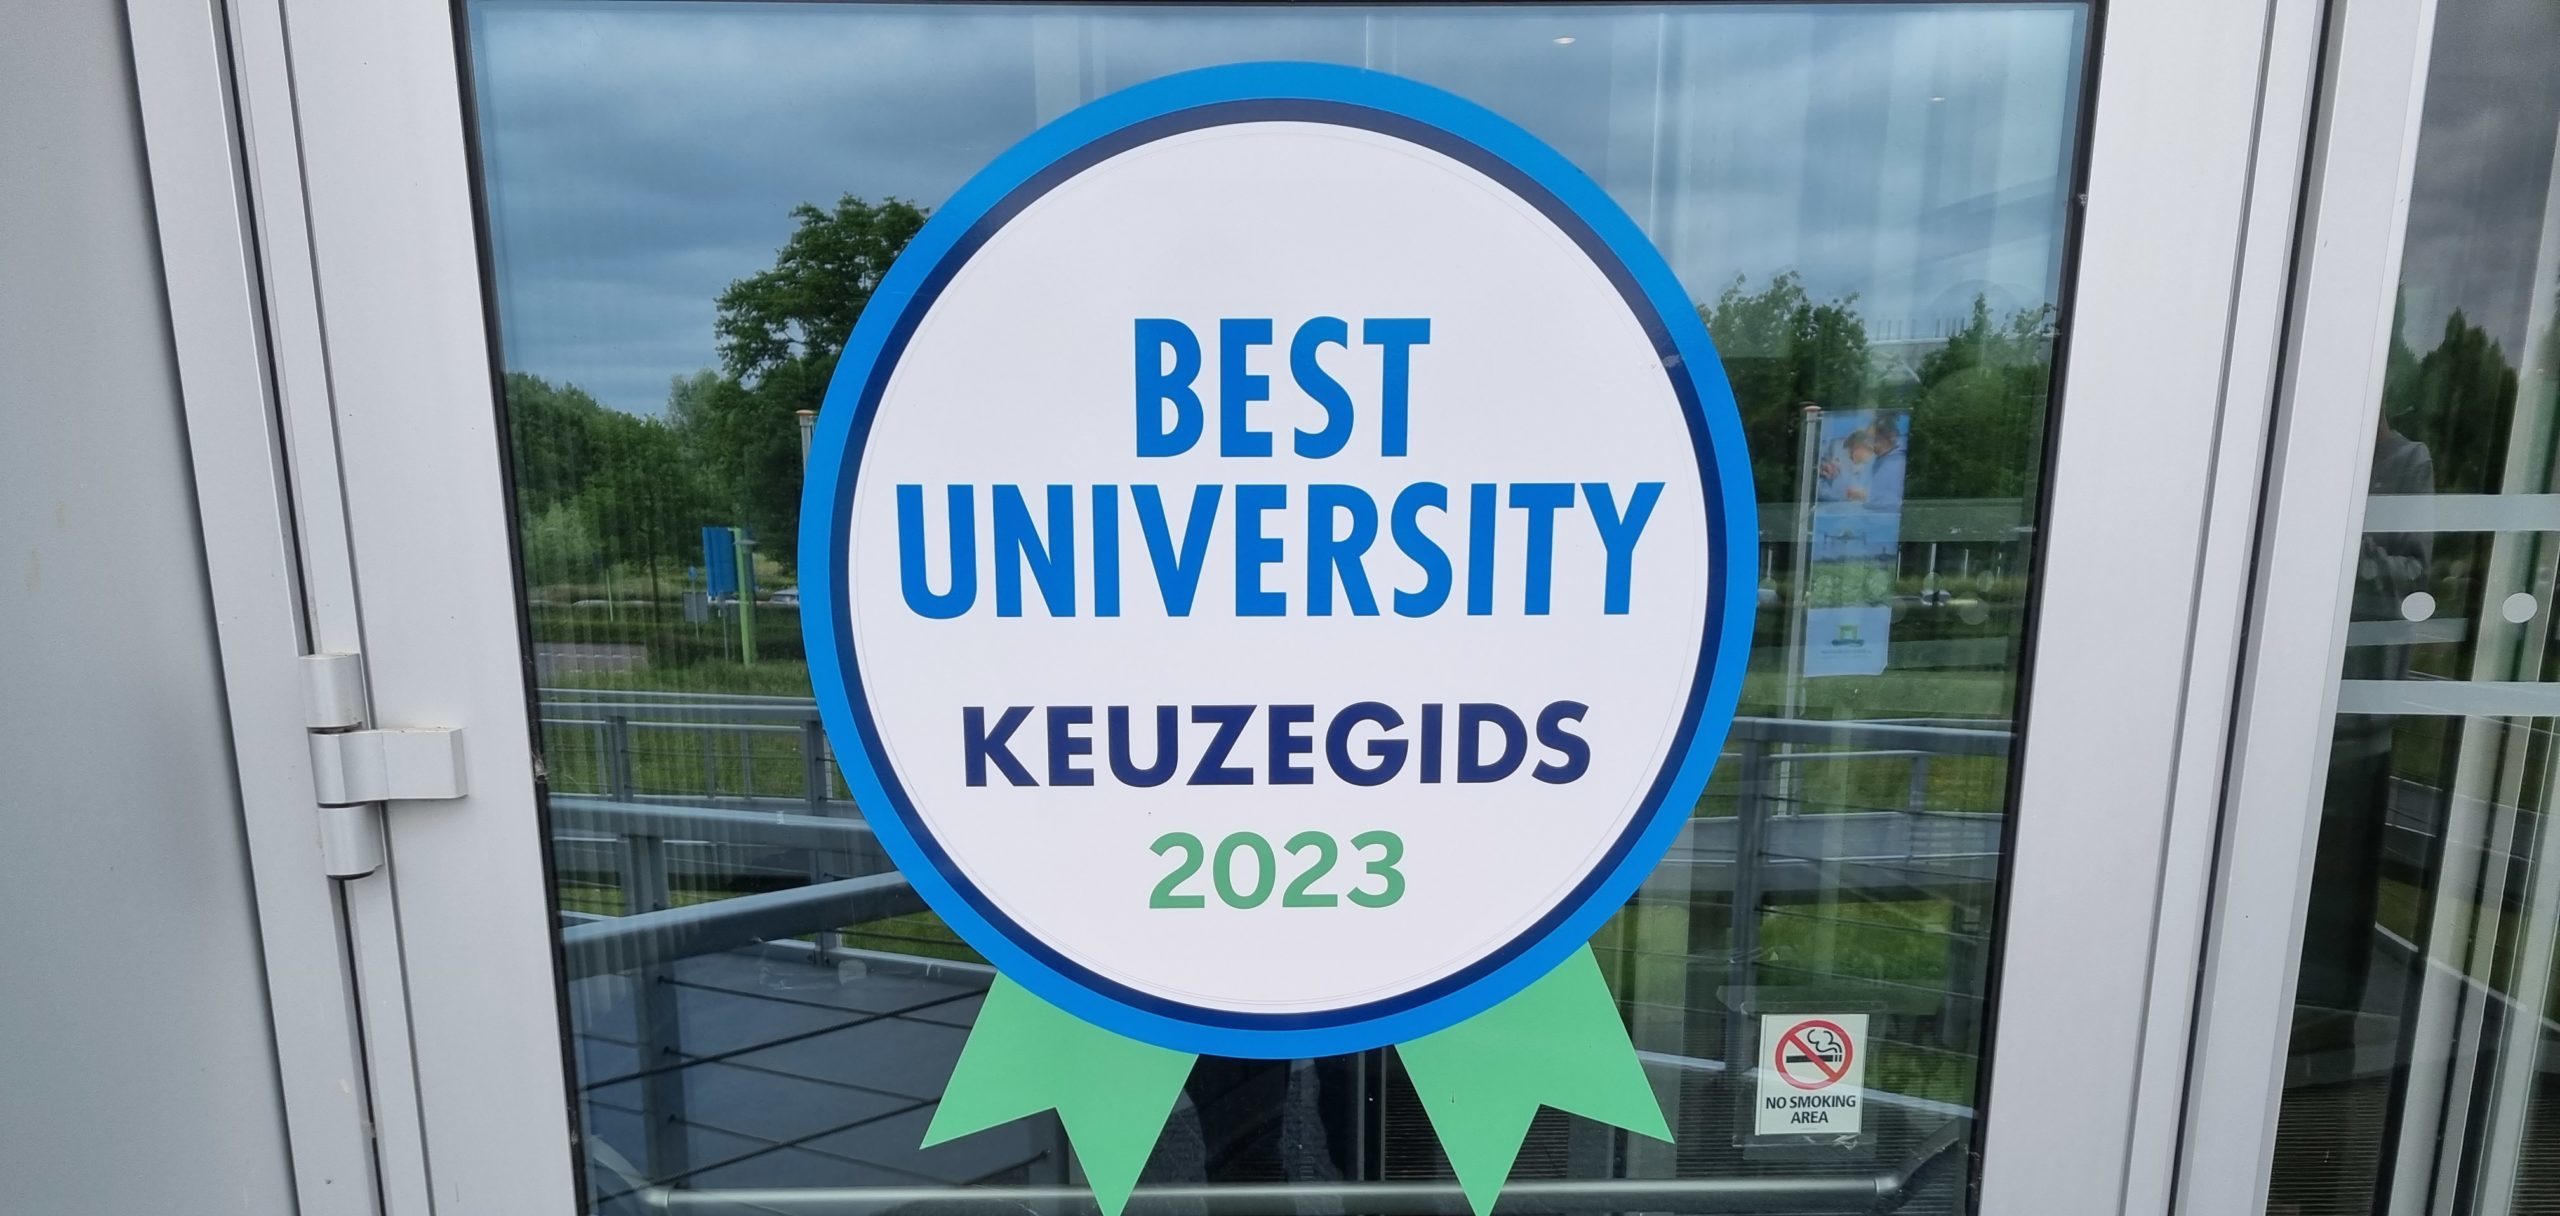 Wageningen tops University Guide once again